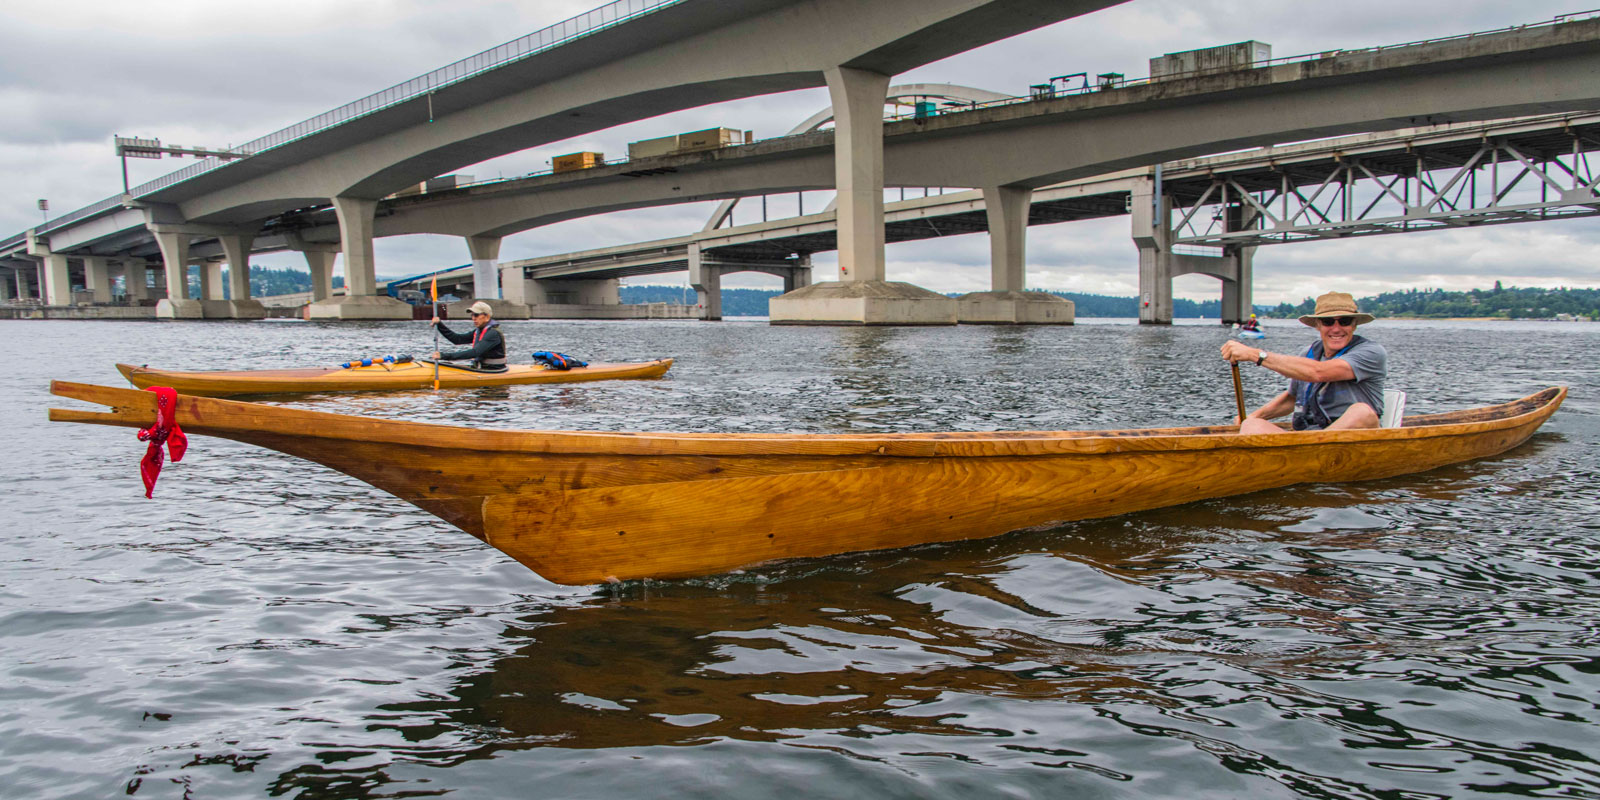 a man paddles the canoe under the bridges in lake washington